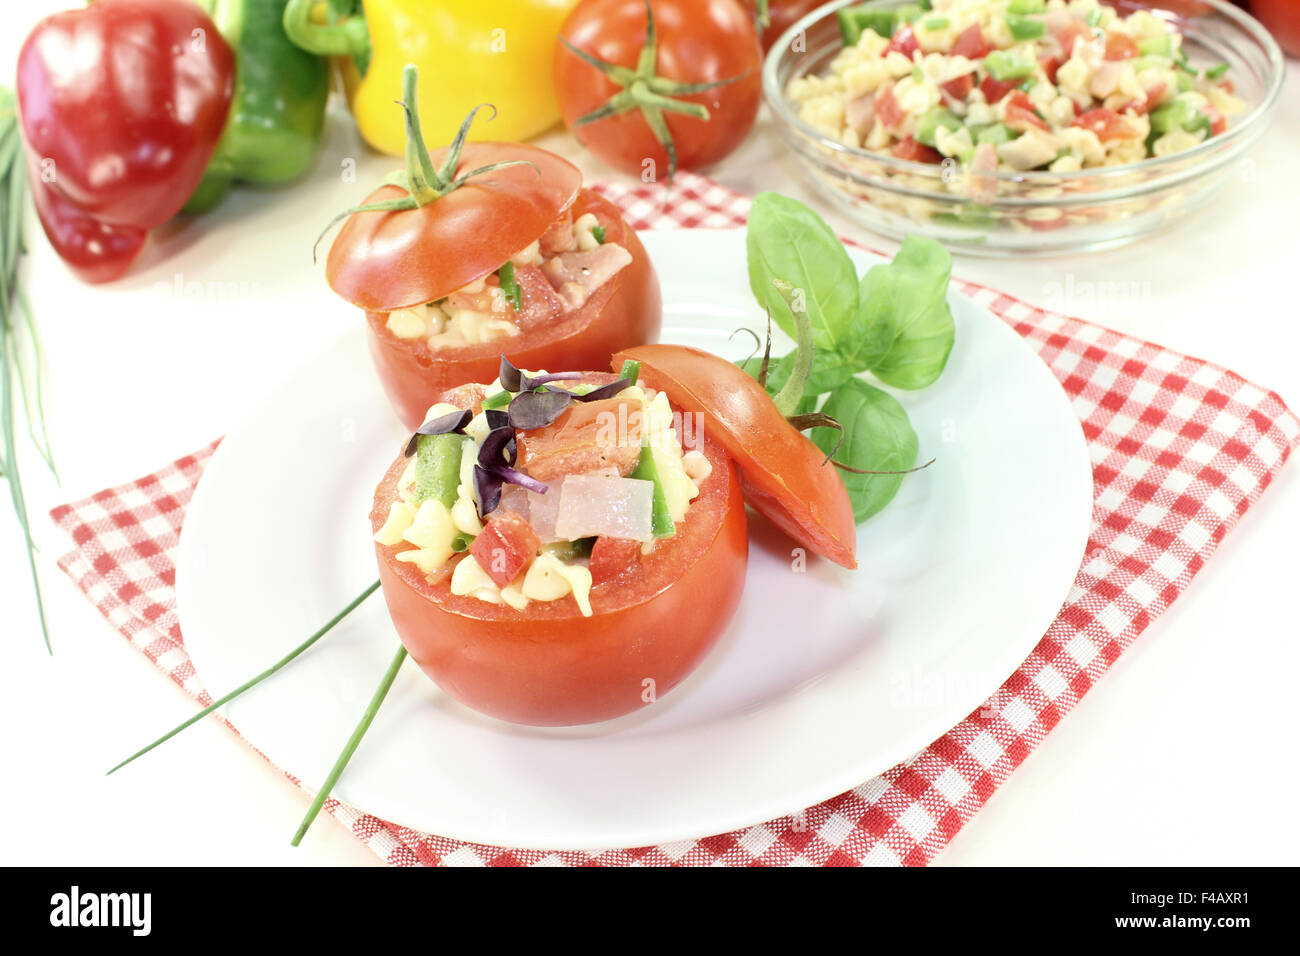 stuffed tomatoes with pasta salad Stock Photo